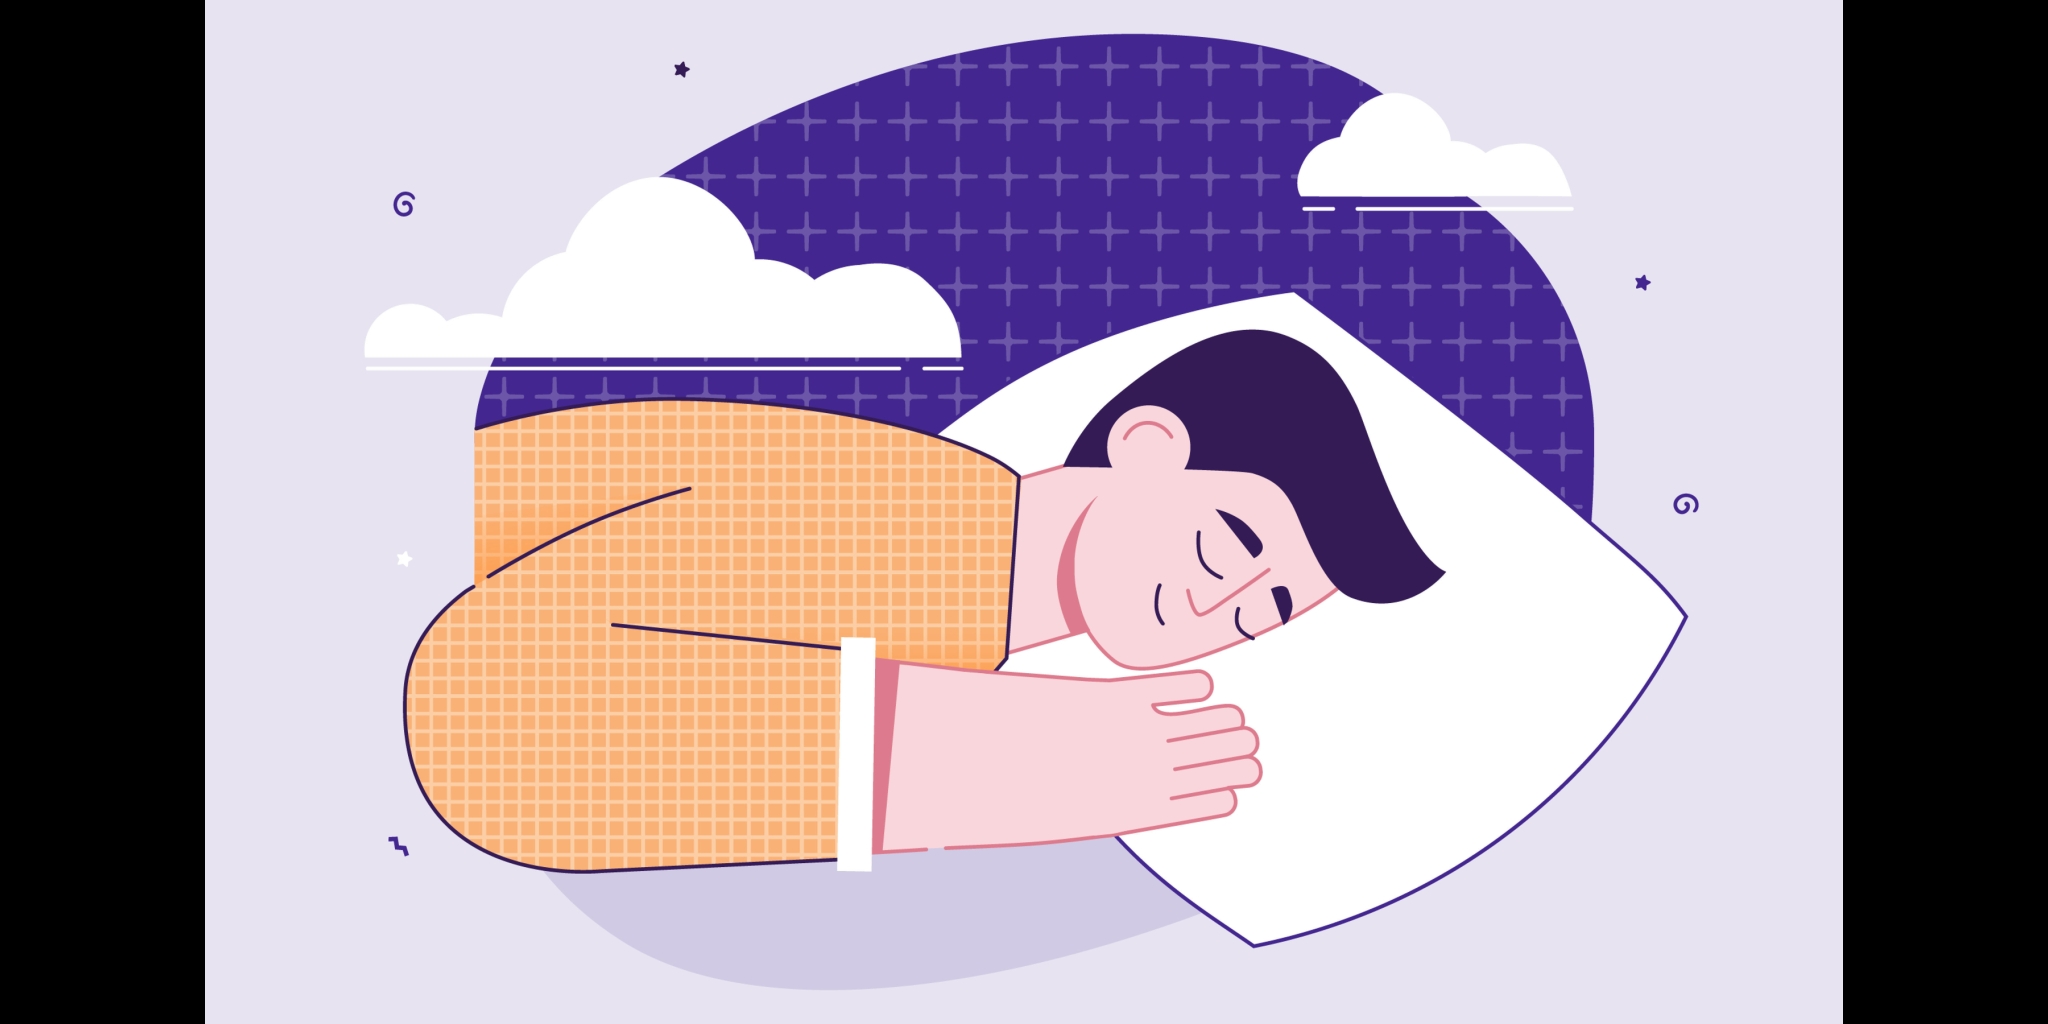 Side Sleeper: Best Positions, Benefits vs. Risks, Tips